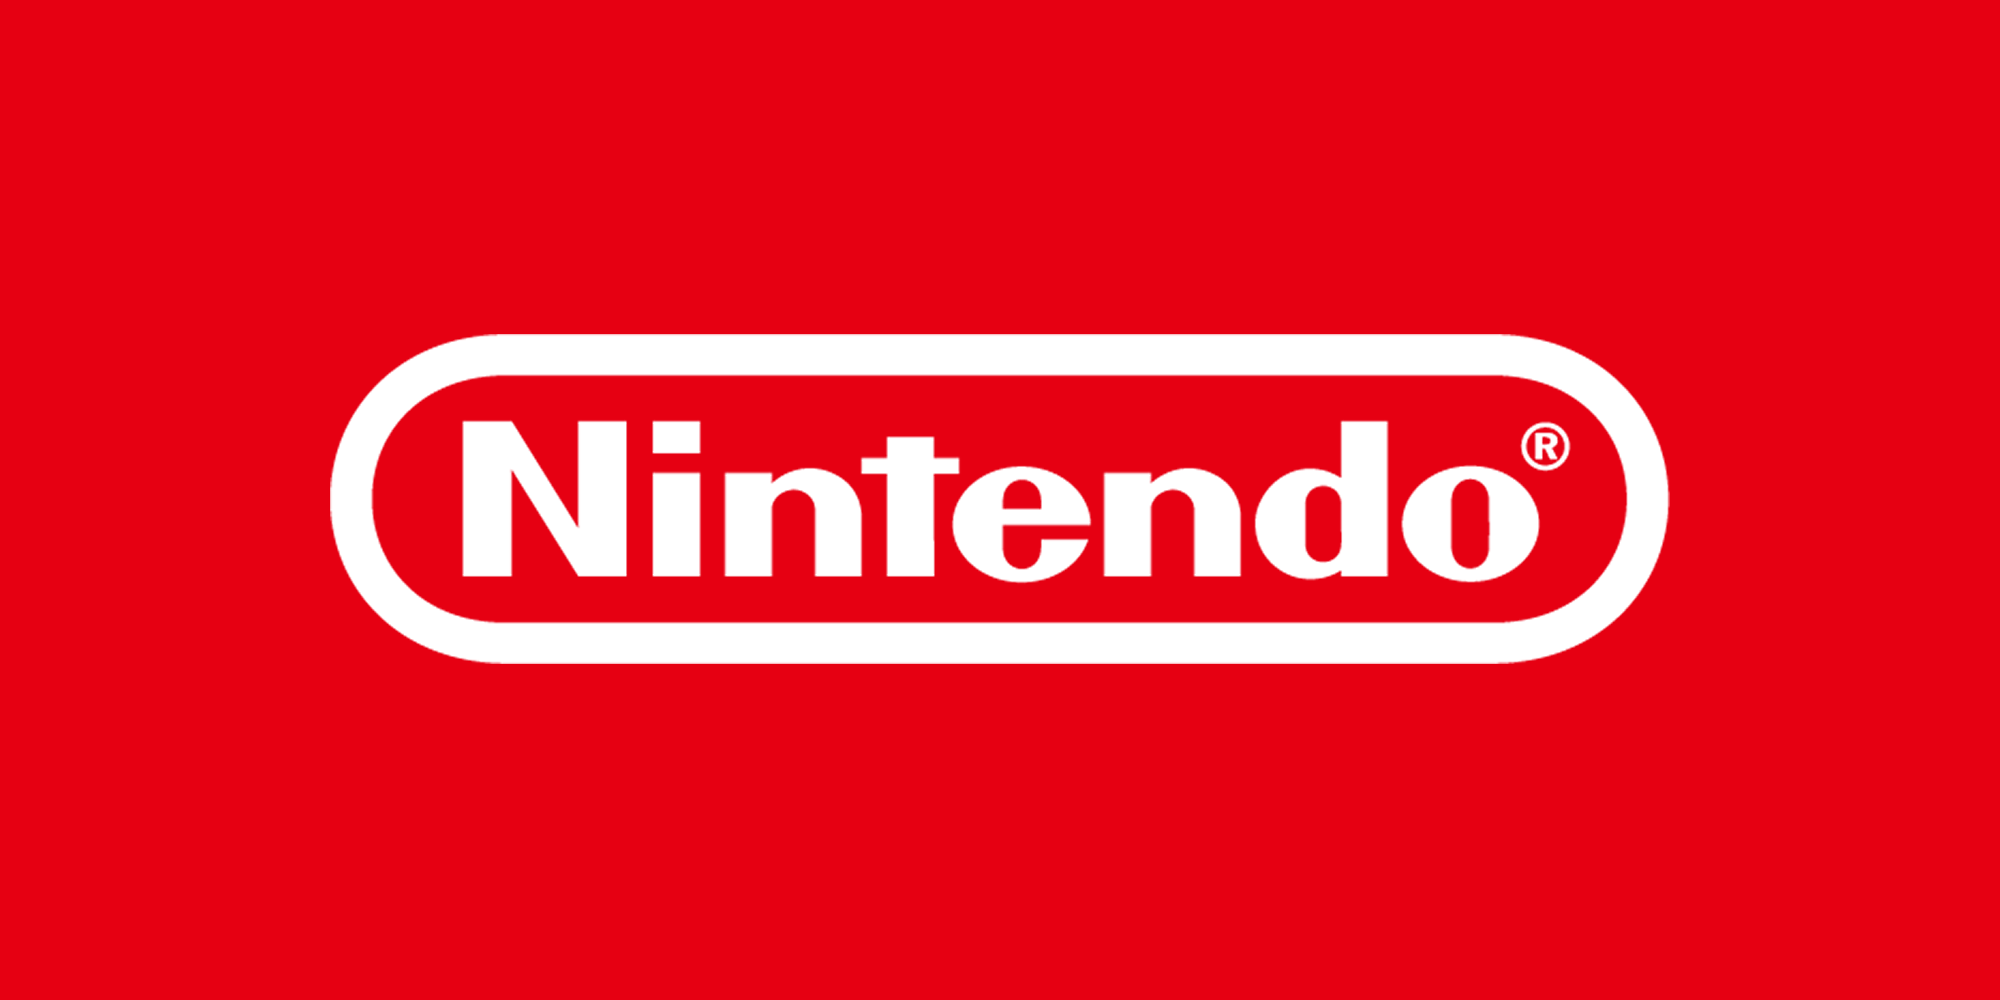 Stardew Valley approderà su Nintendo Switch nel 2017